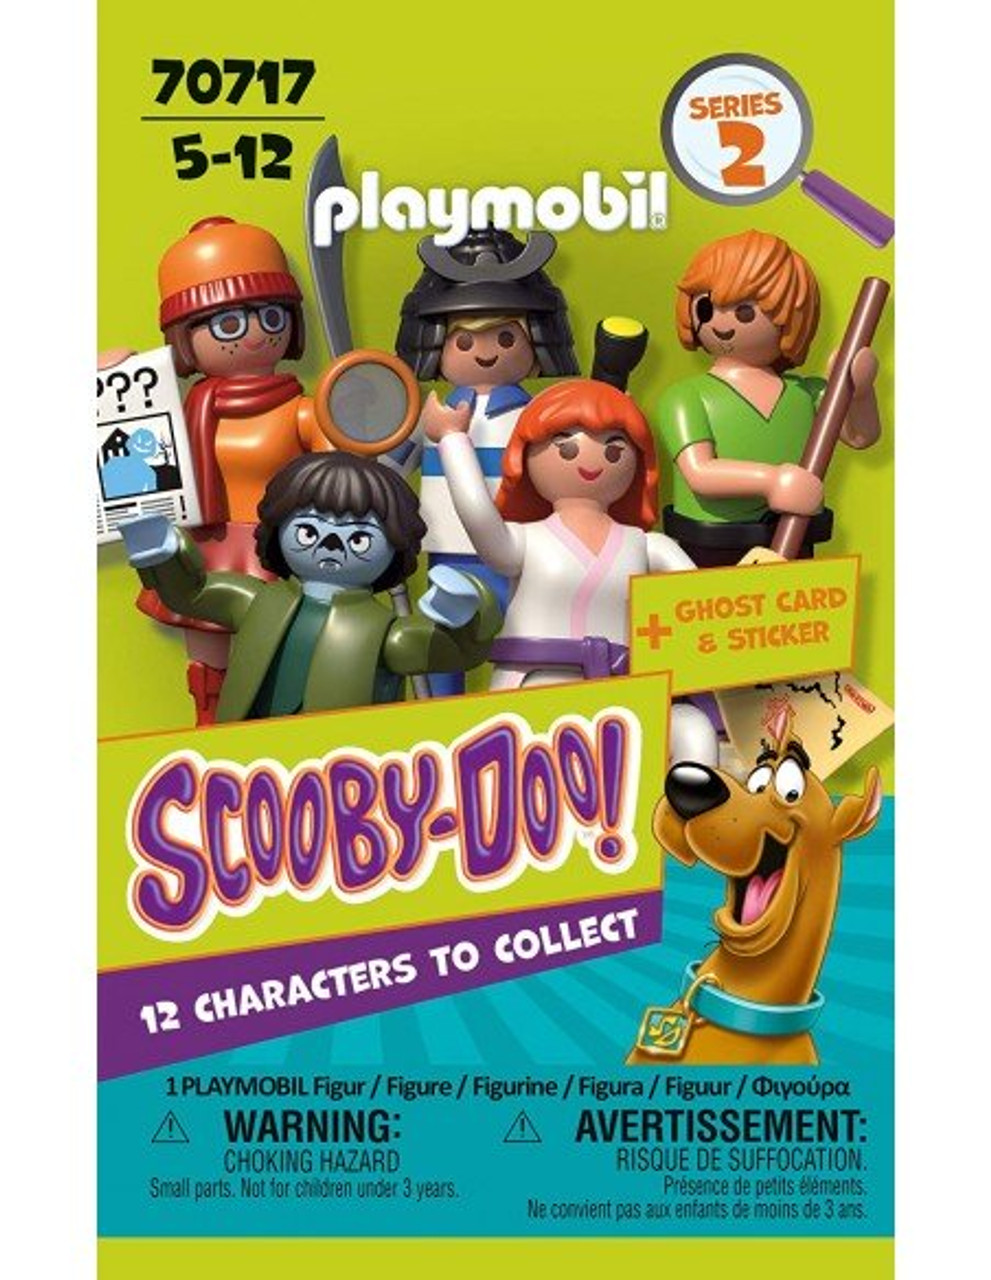 Playmobil SCOOBY-DOO! - Fireman figurine Collector's item - 7071